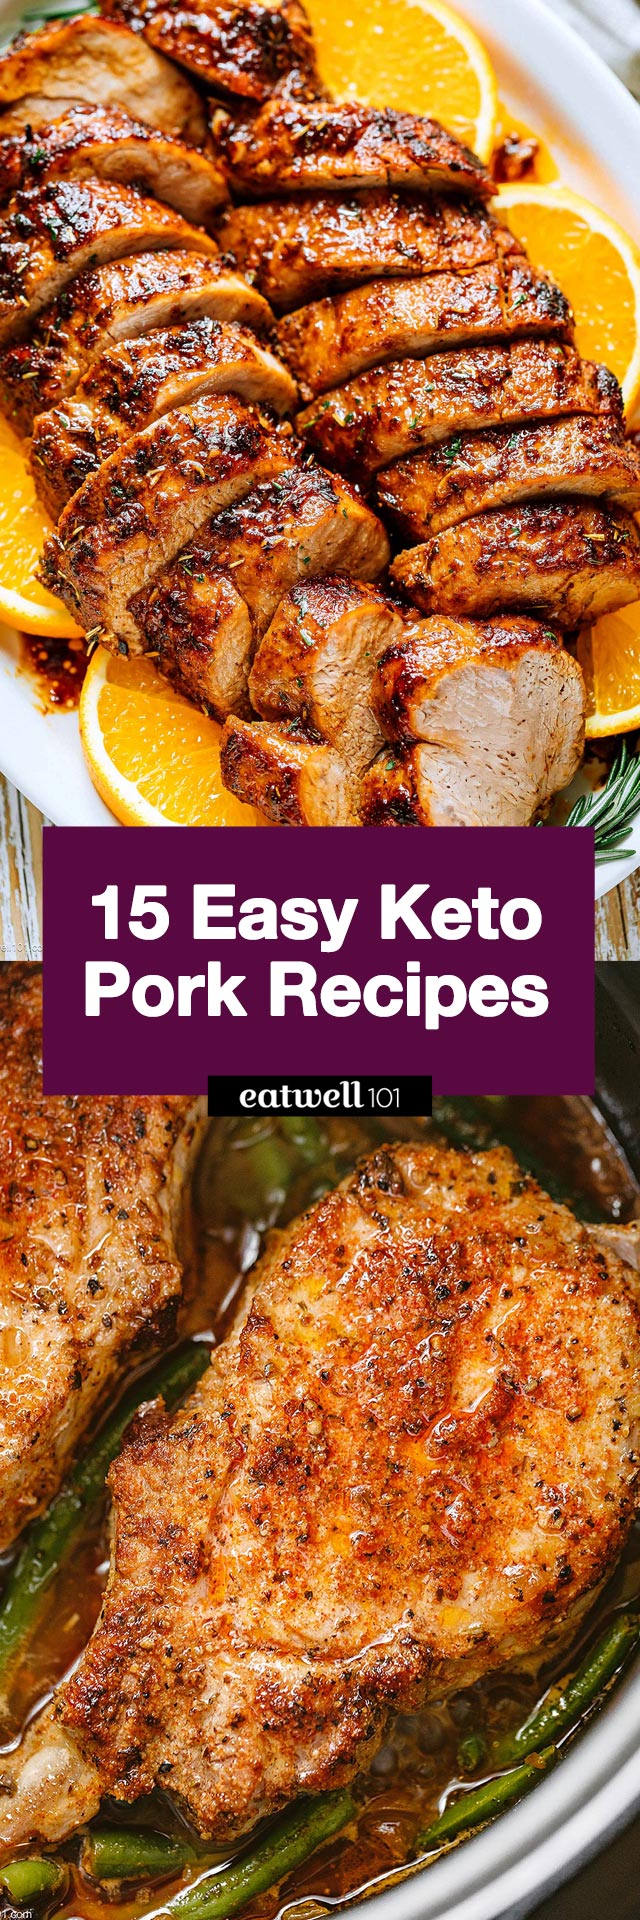 15 Best Keto Pork  Recipes - #pork #keto #recipes #eatwell101 - Try out best keto pork recipes to add to your meal plan. From keto-friendly tenderloin roasts to low-carb pork chops, we've got you covered!